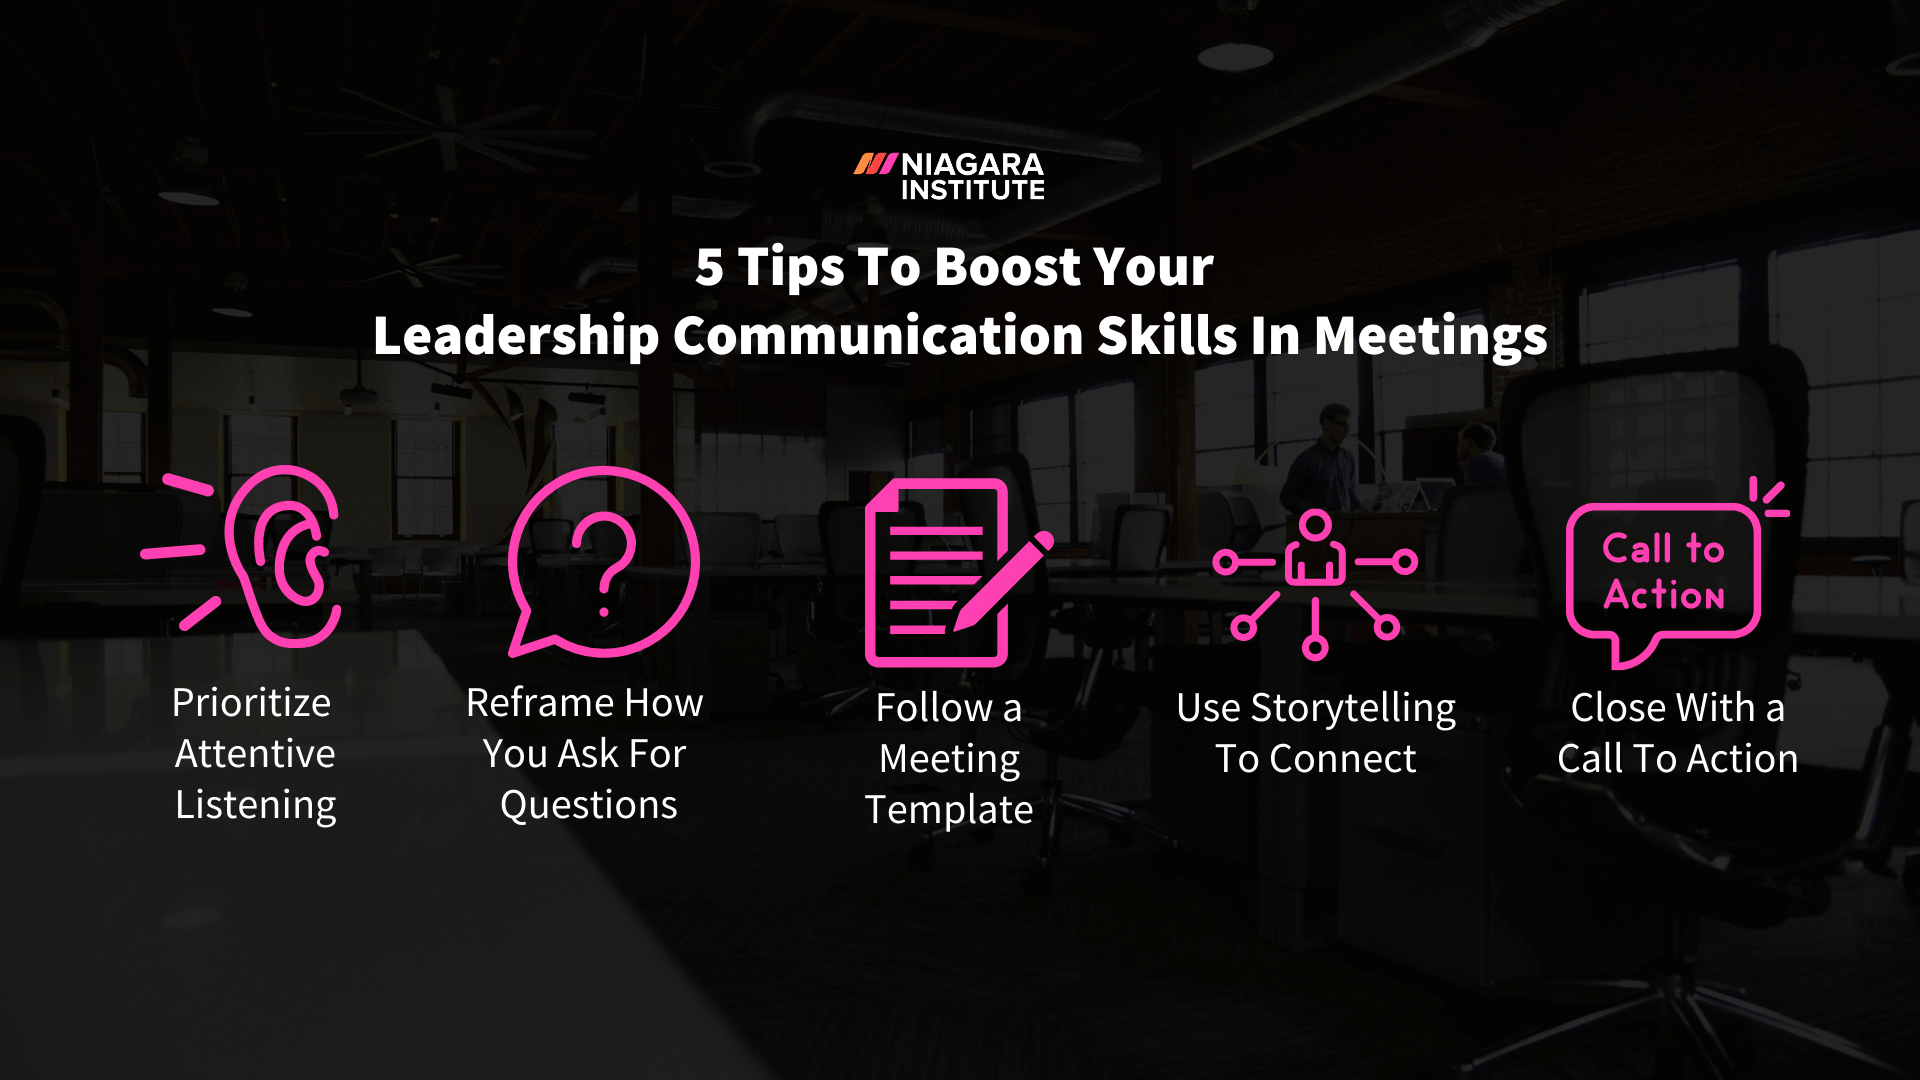 Leadership Communication Skills in Meetings - Niagara Institute 